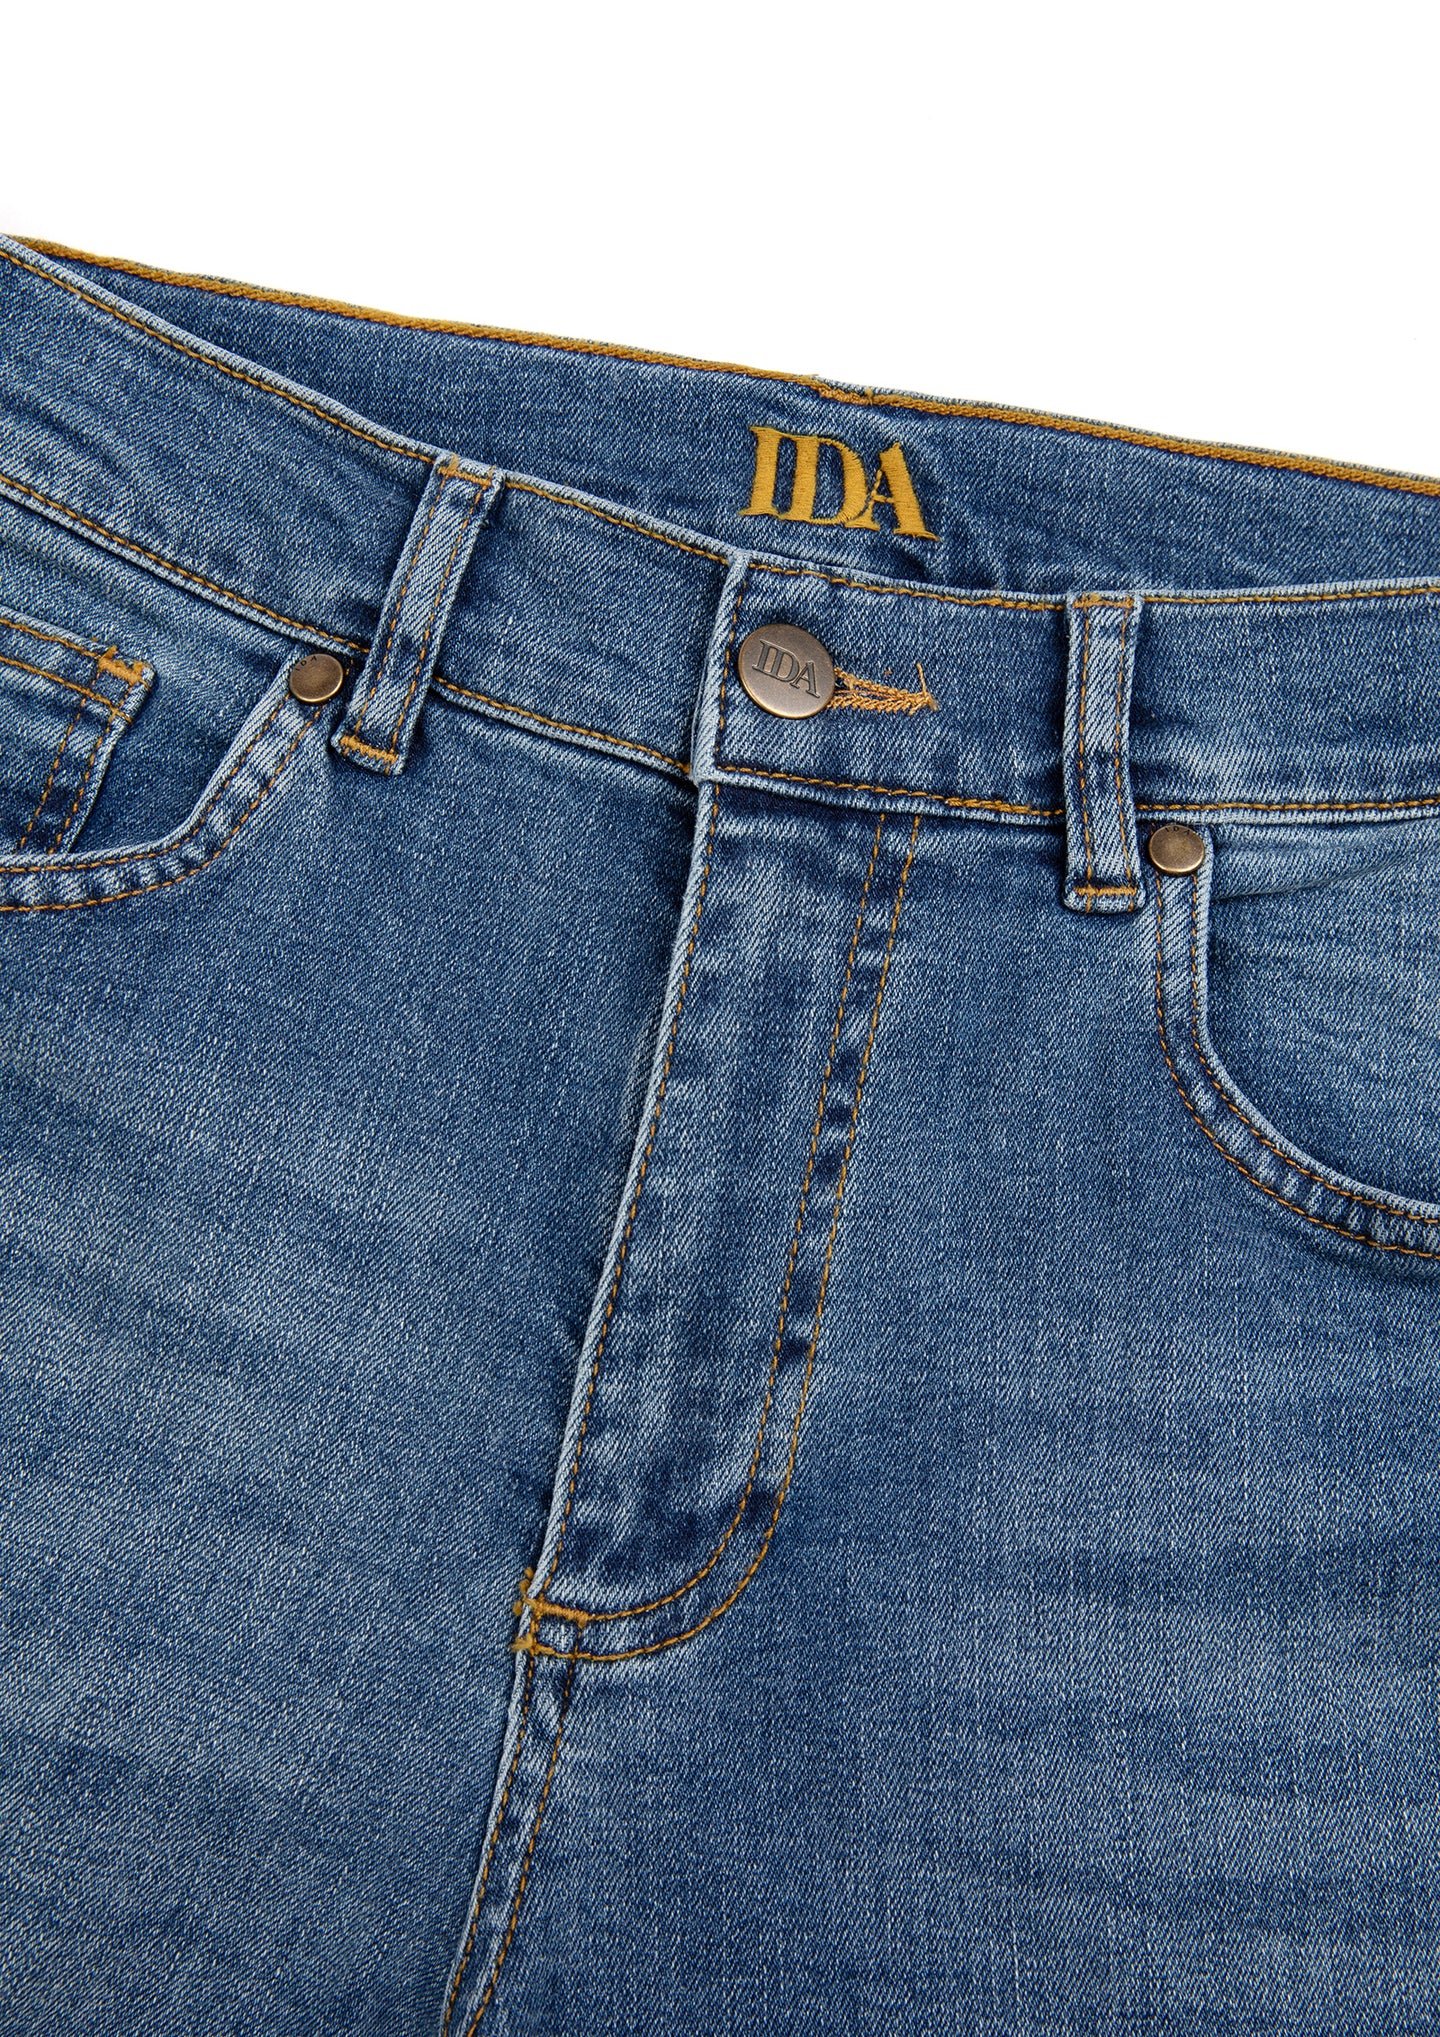 mens slim fit blue mid wash jeans jack